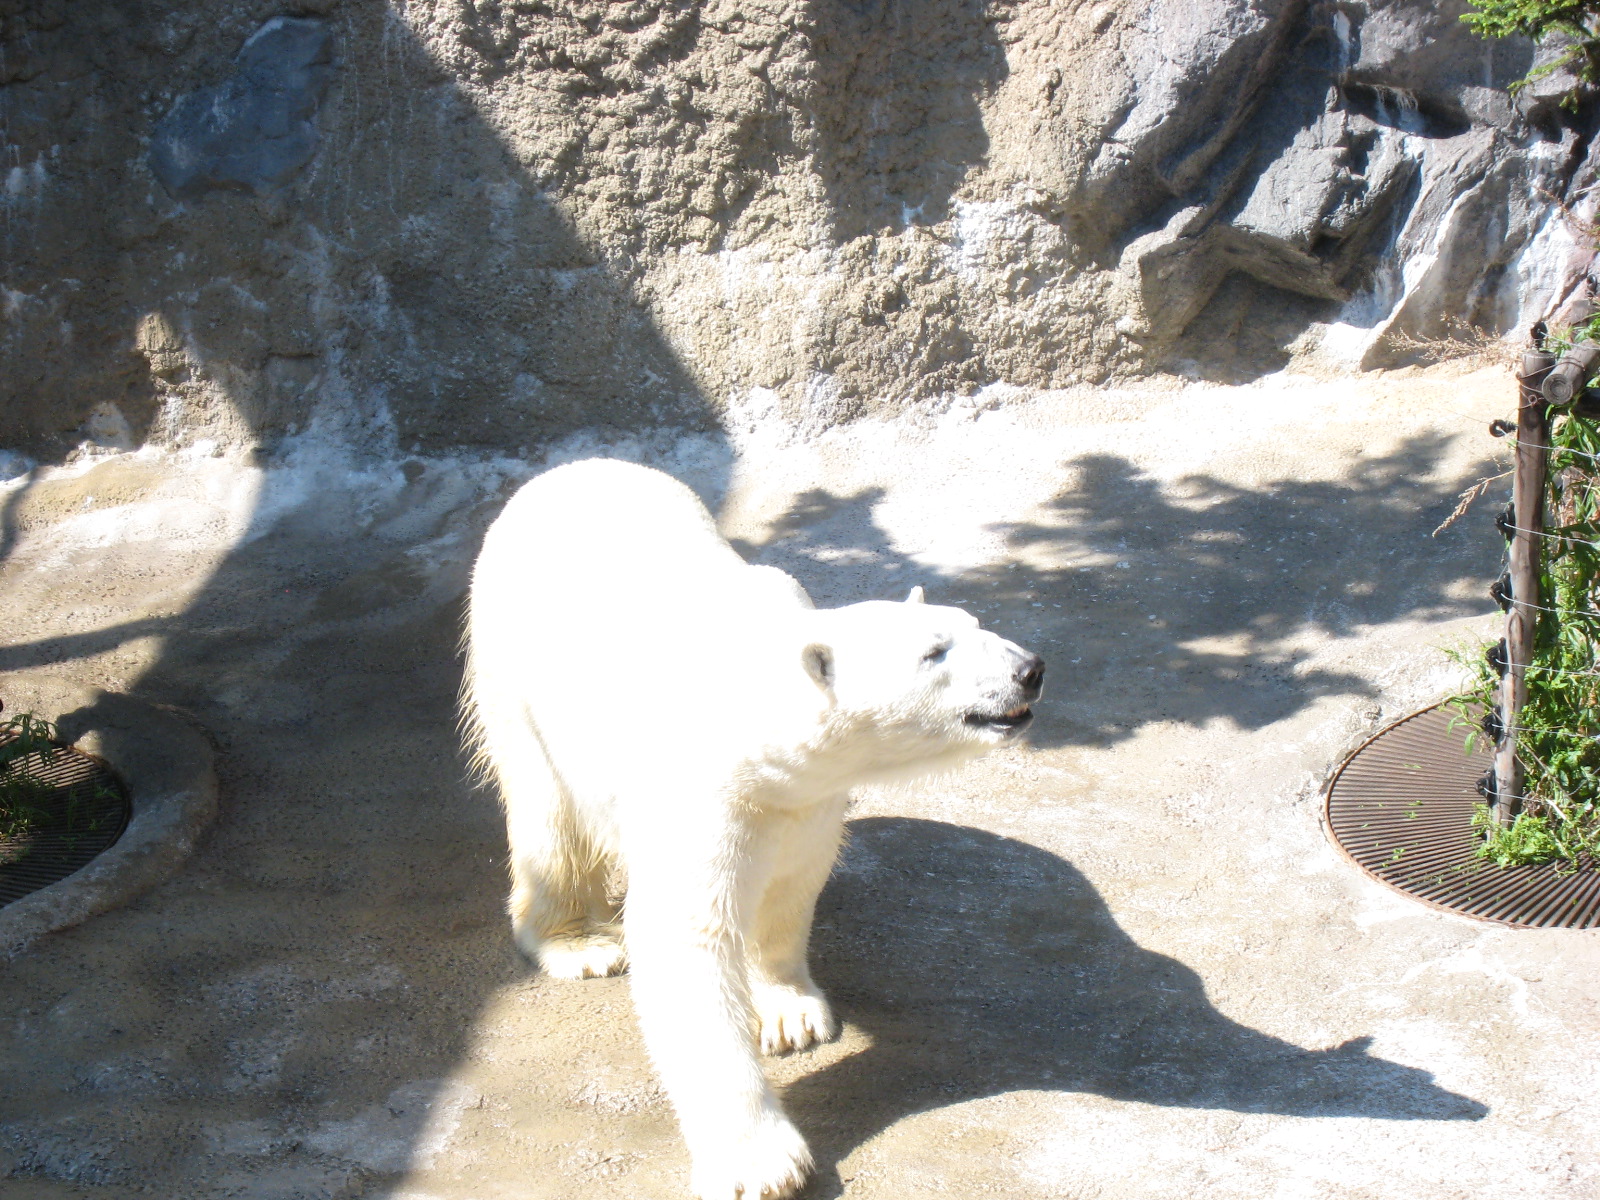 a polar bear looking into the camera in a zoo enclosure